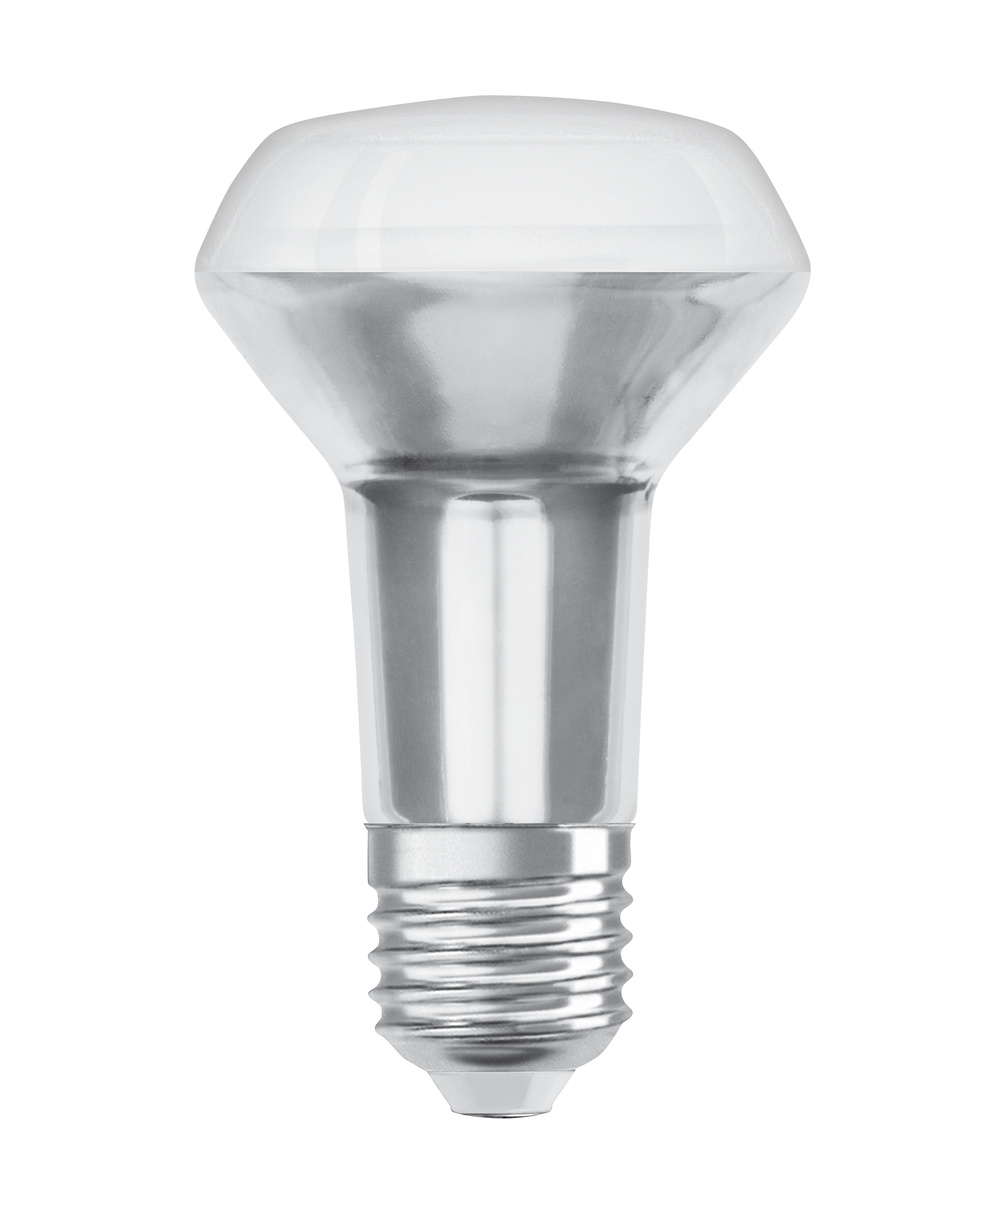 Ledvance LED lamp LED R63 DIM P 4.9W 927 E14 – 4099854047954 – replacement for 60 W - 4099854047954